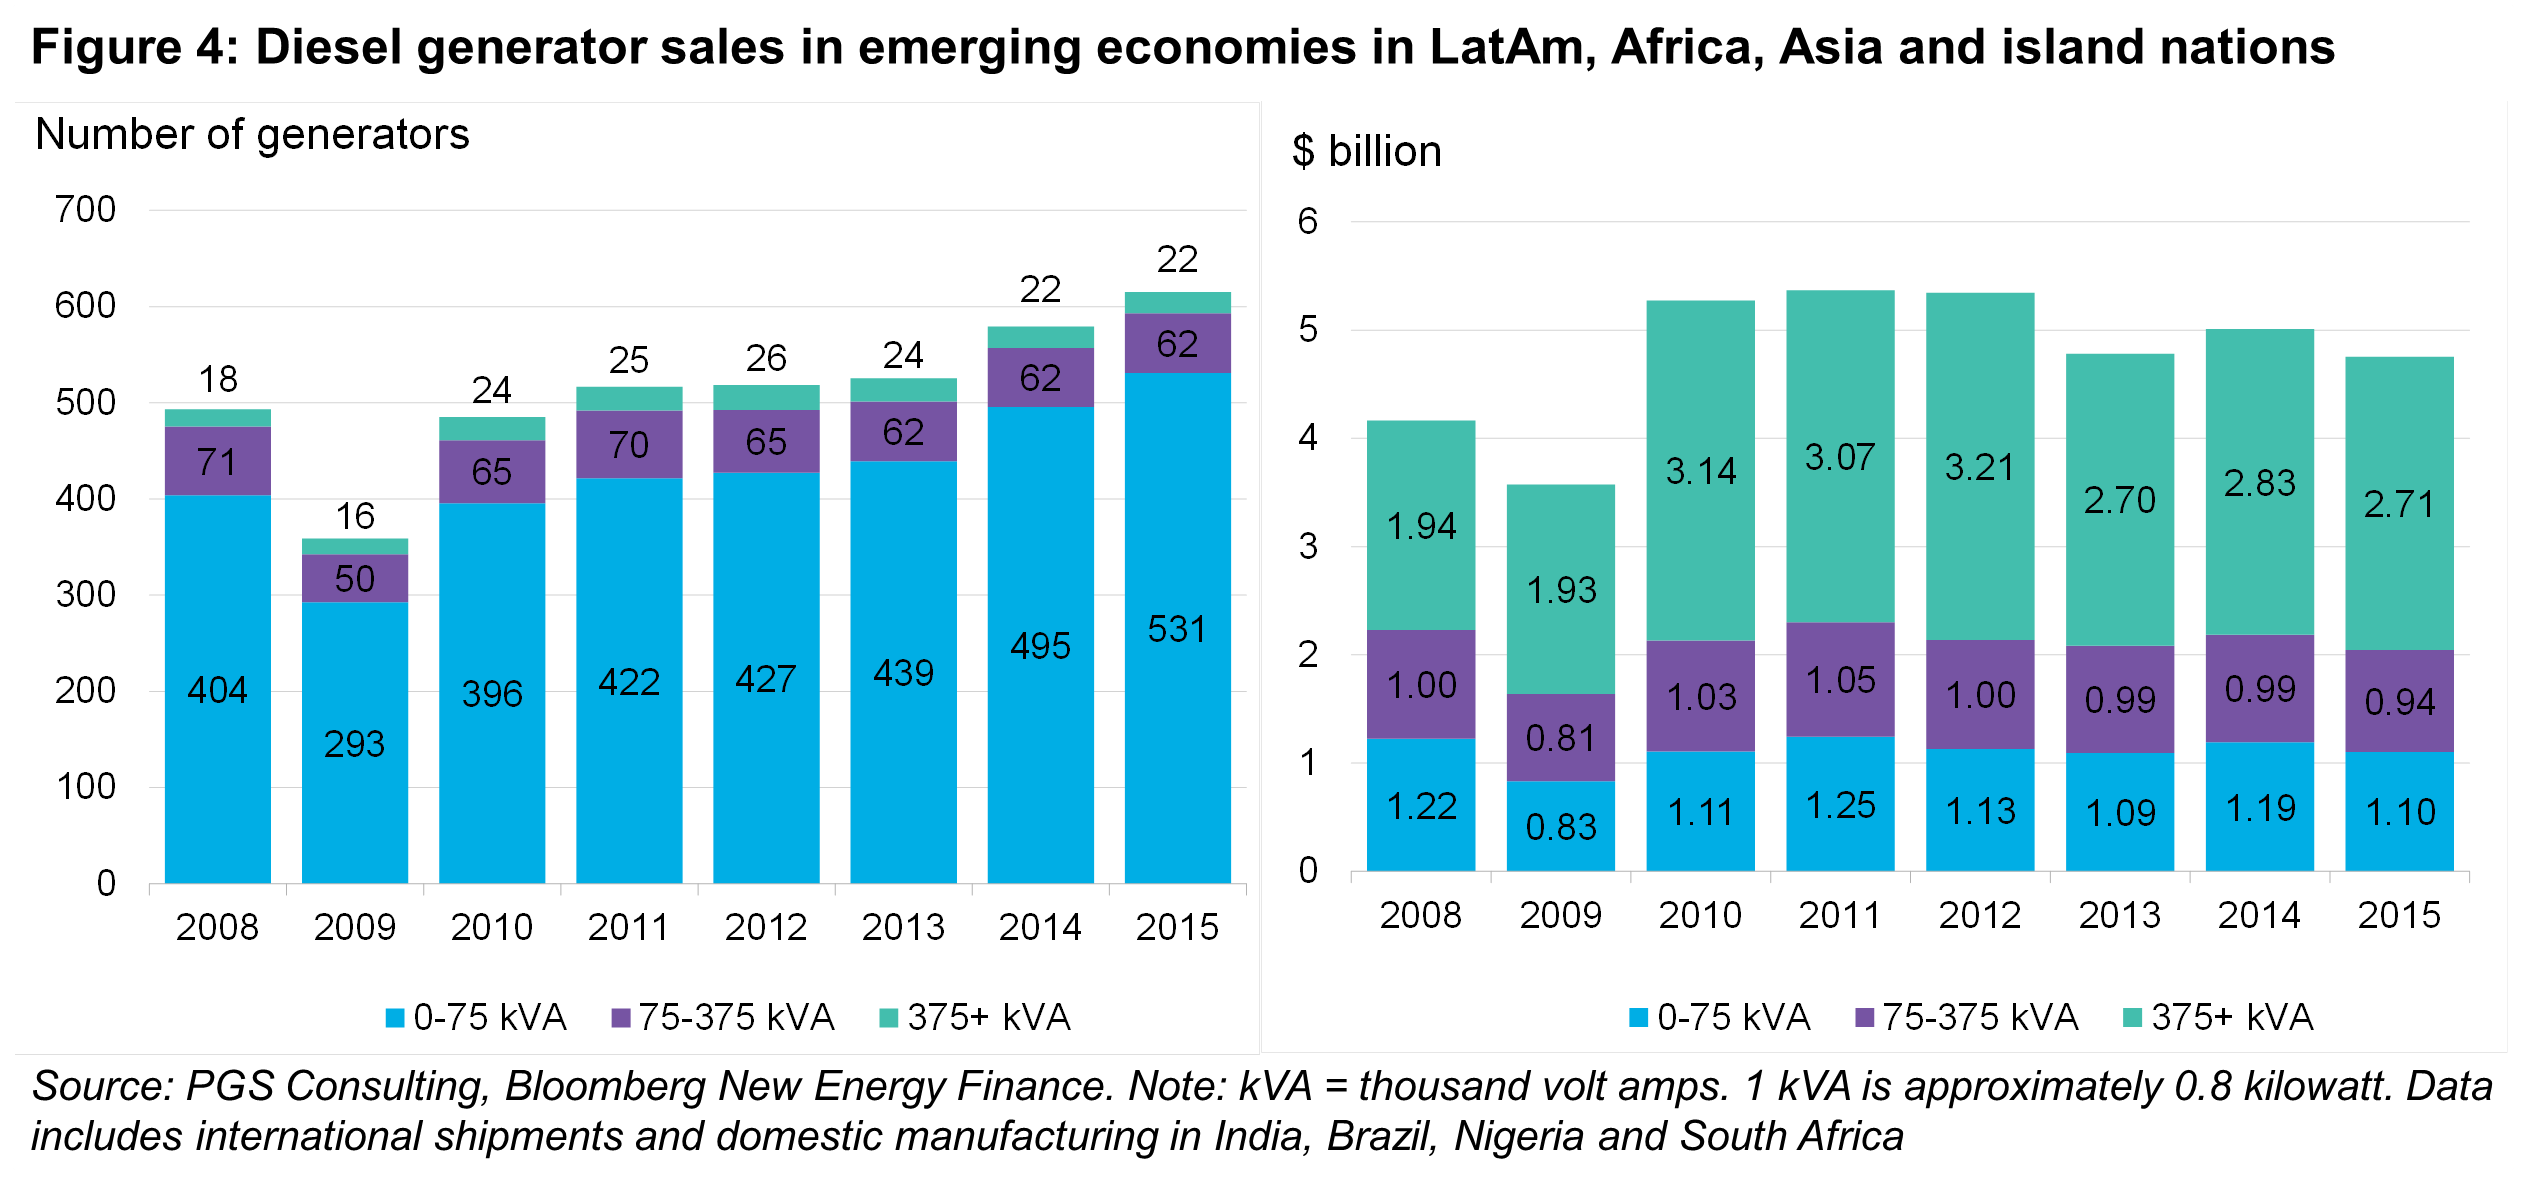 OG - Fig4 - Diesel generator sales in emerging economies in LatAm, Africa, Asia and island nations